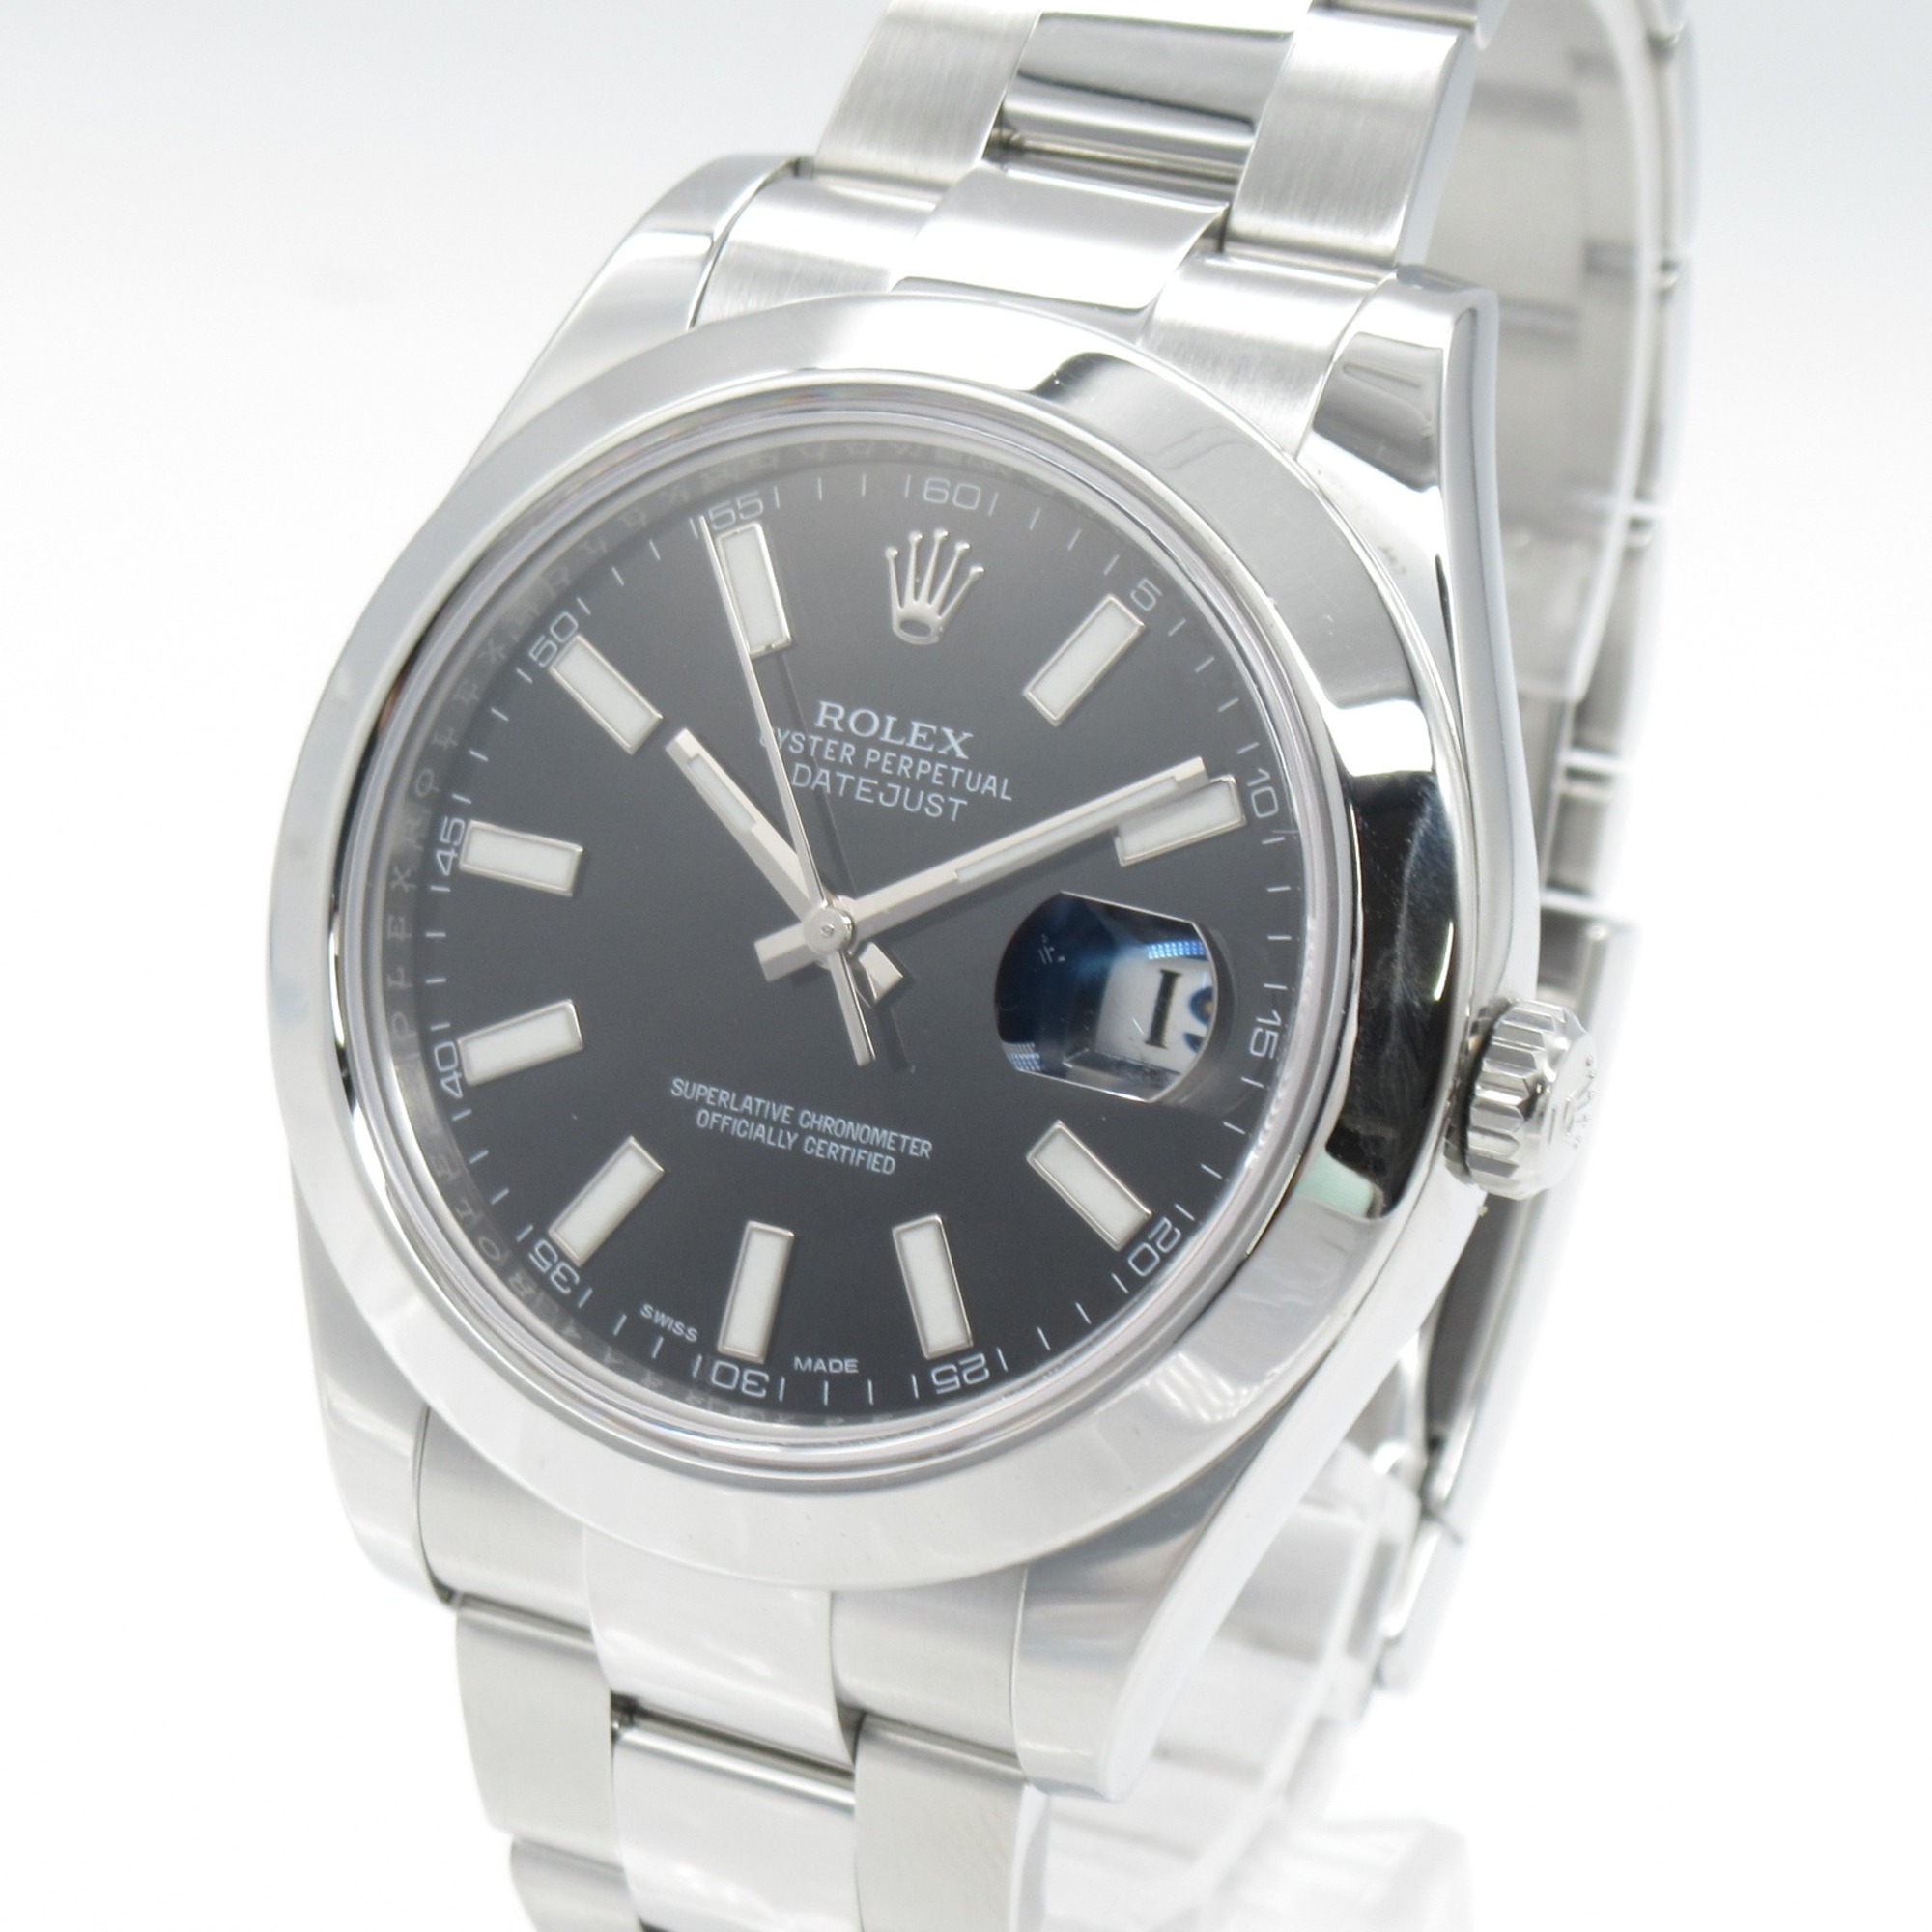 ROLEX Datejust 2 Random Number Wrist Watch Wrist Watch 116300 Mechanical Automatic Black BK/BA Stainless Steel 116300